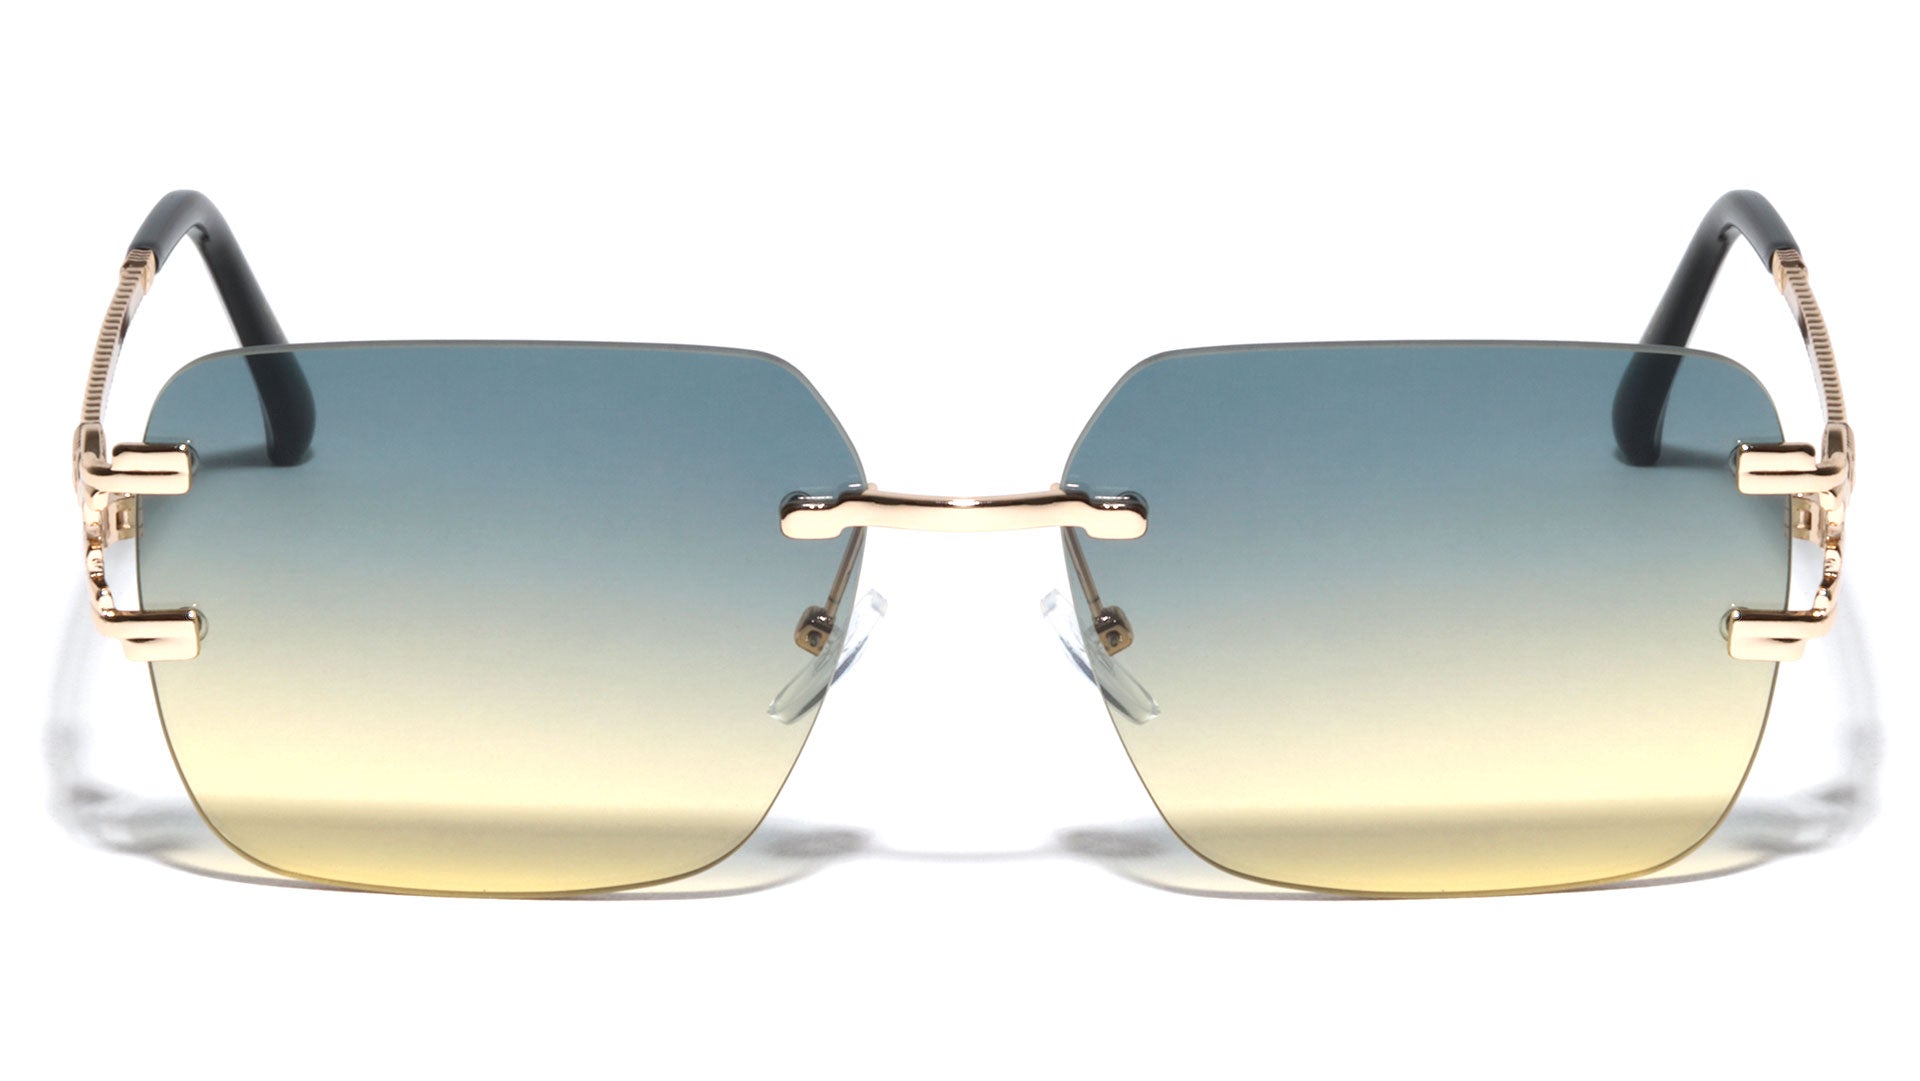 Rimless Square Sunglasses, 60mm